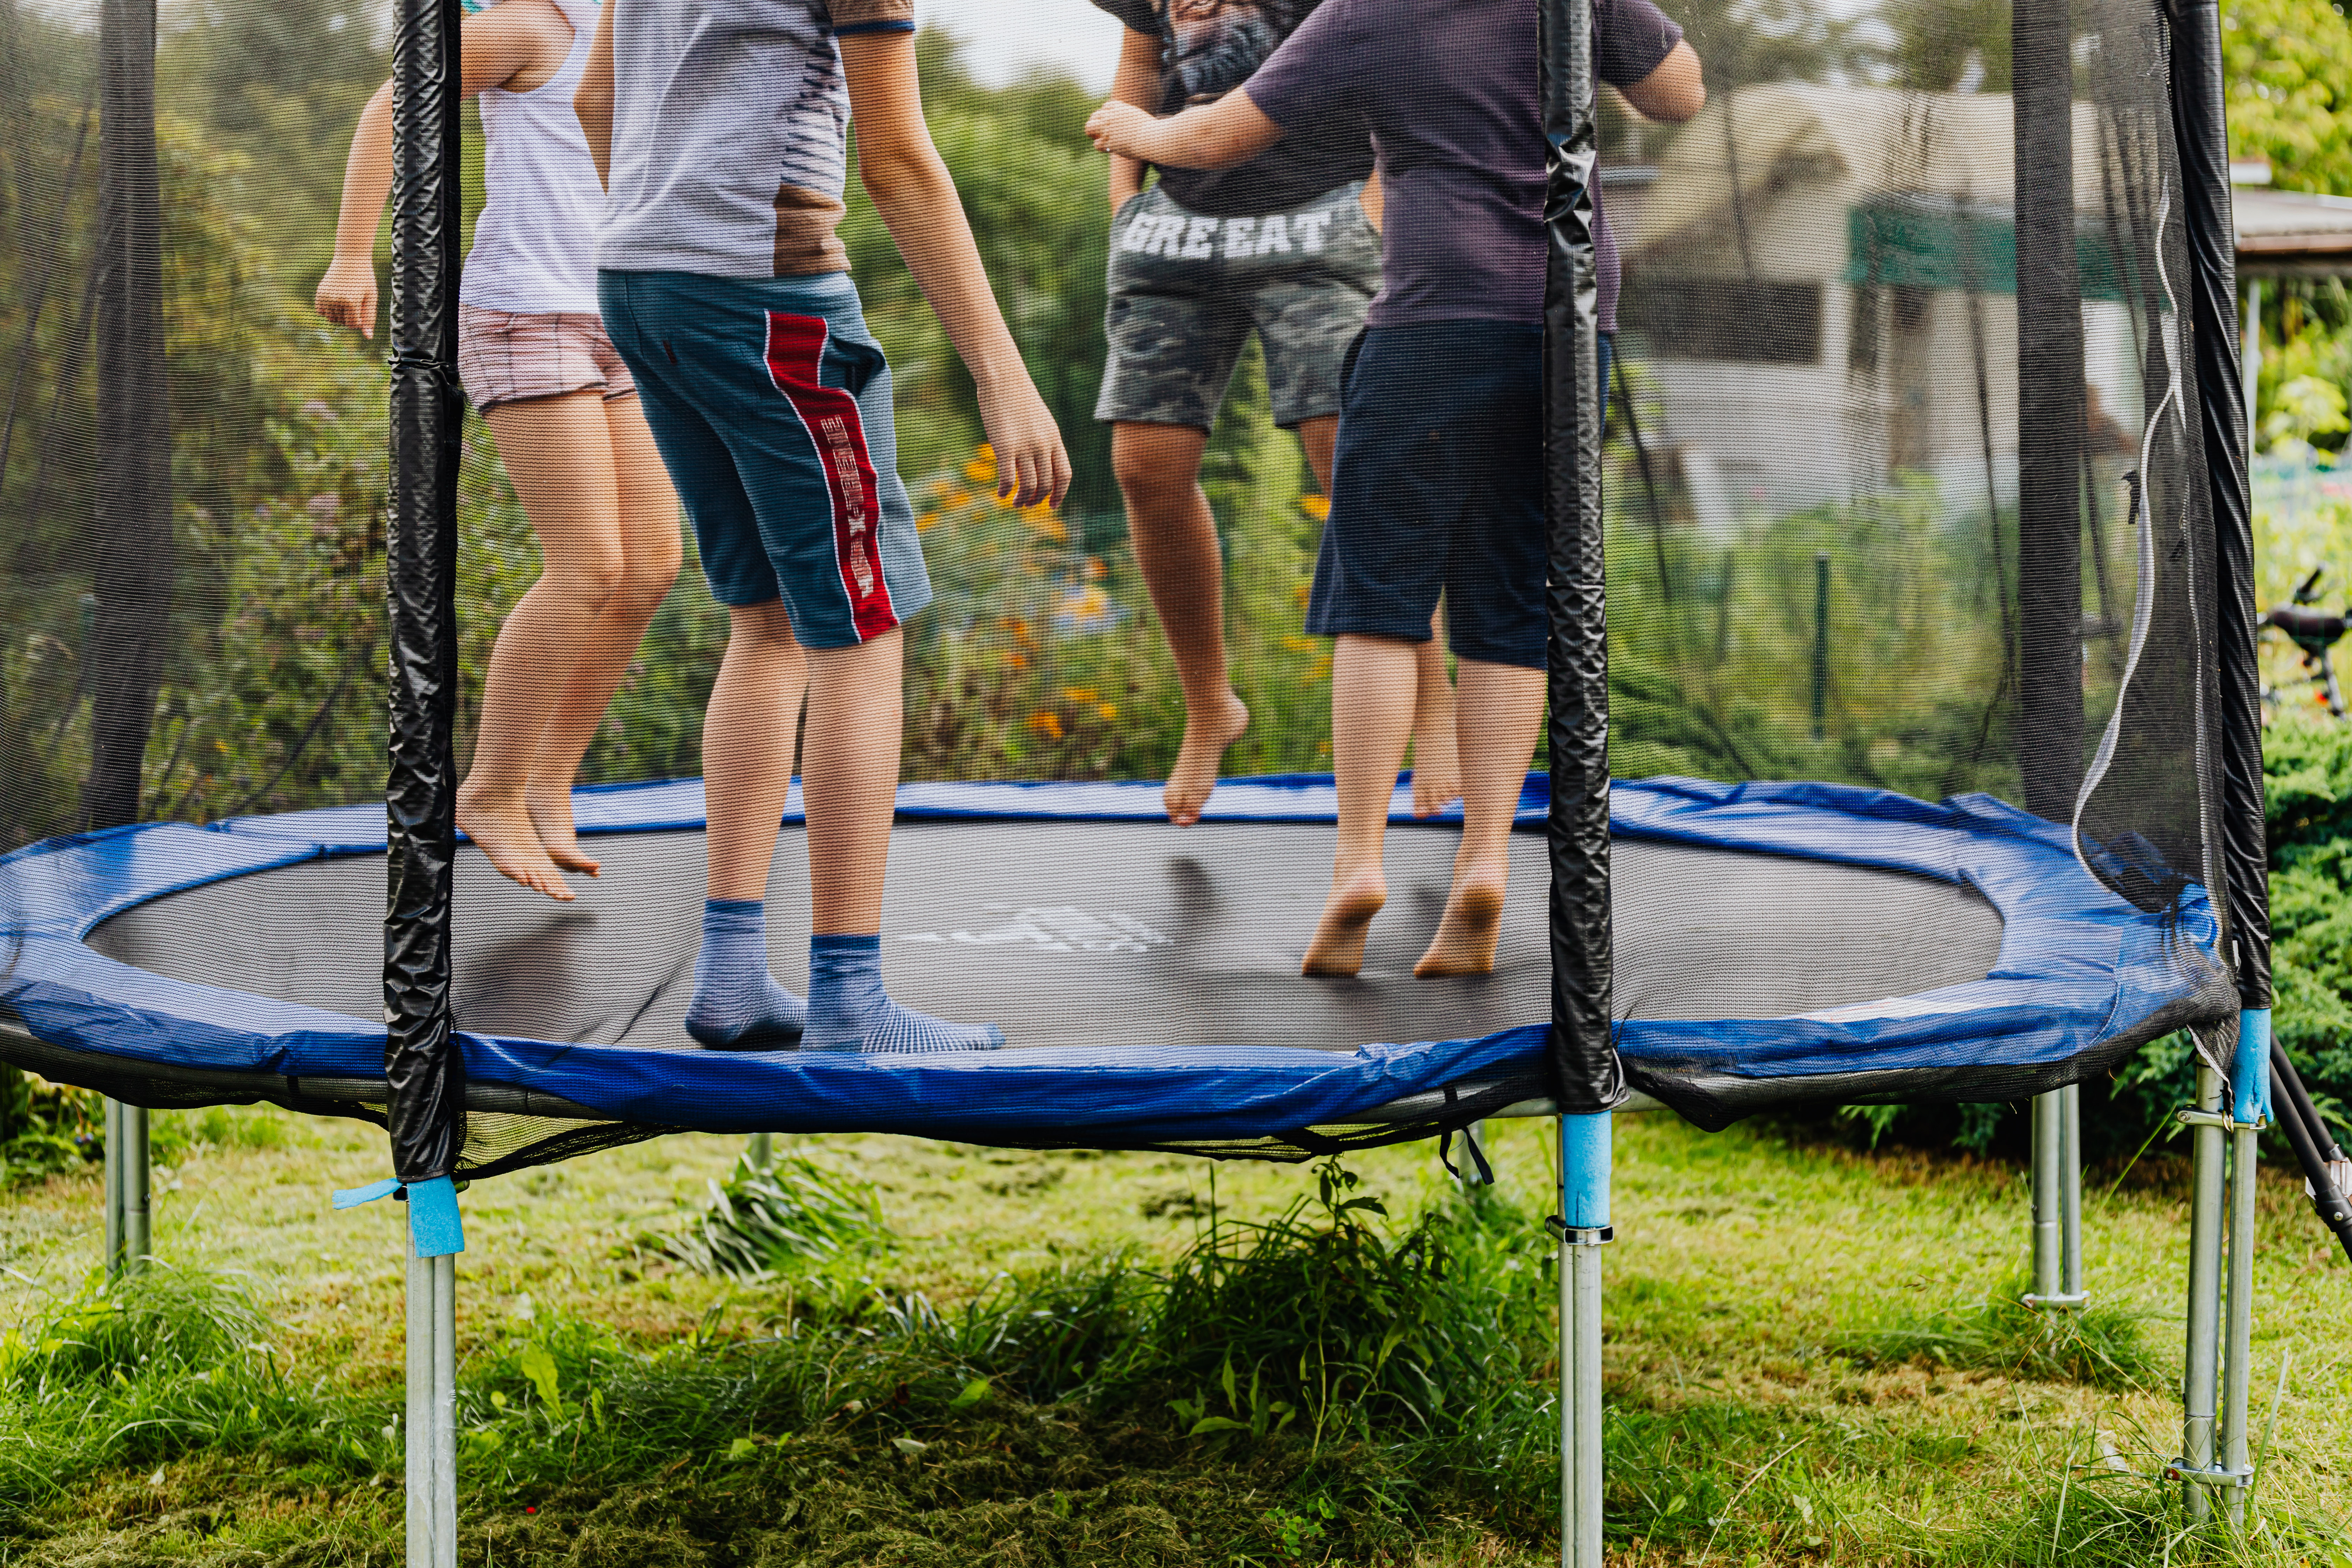 Kids on an outdoor trampoline